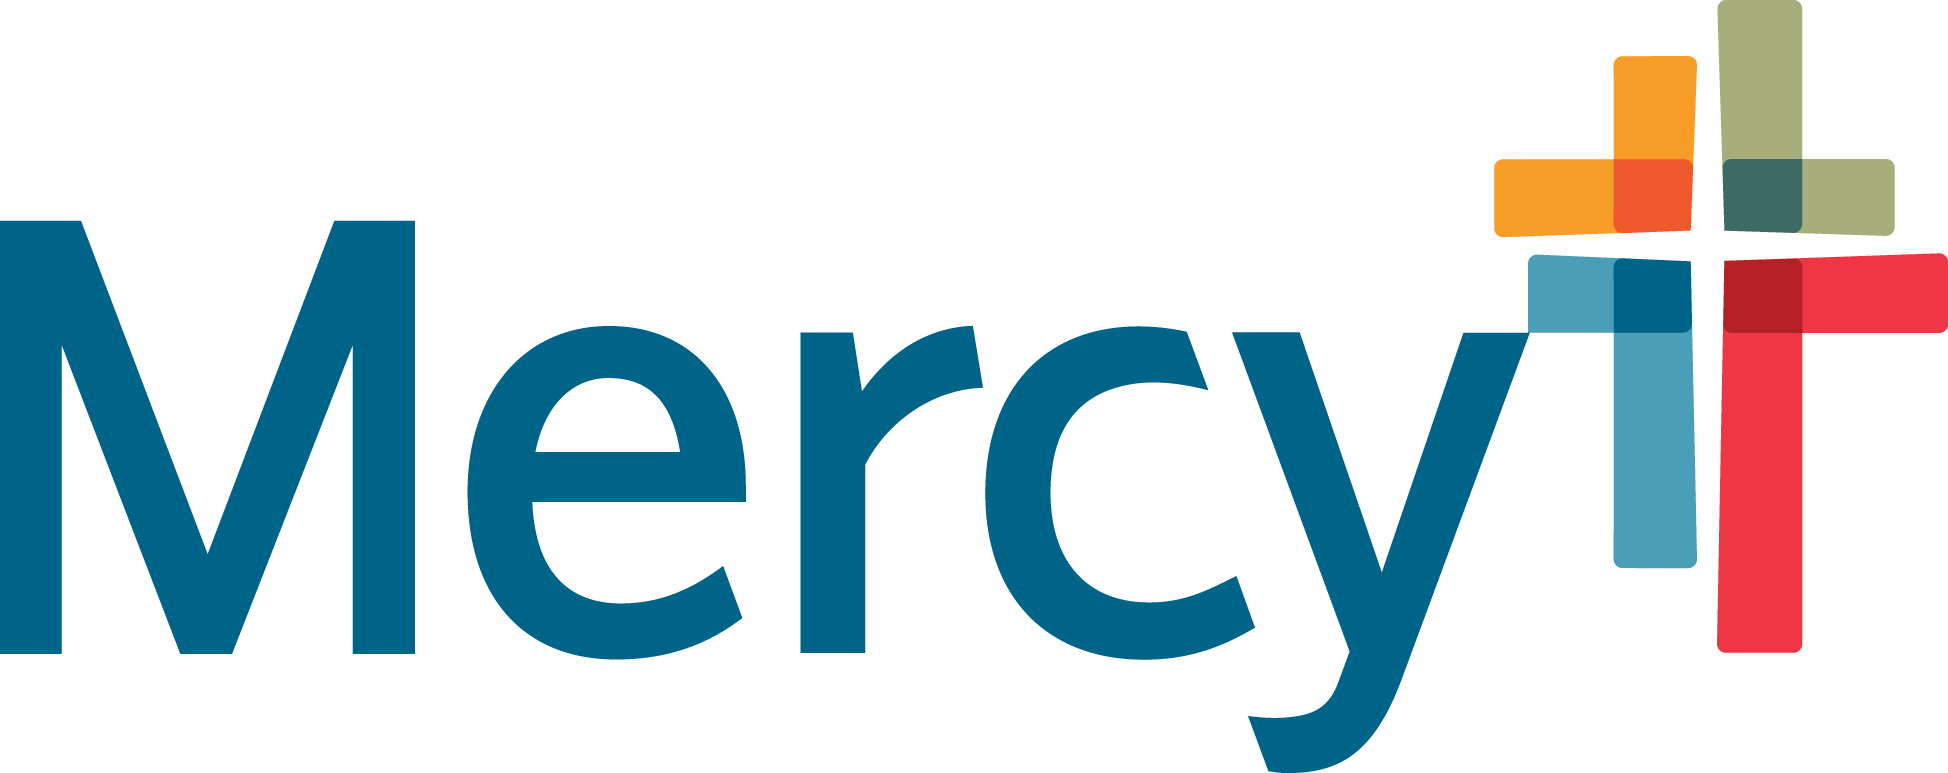 Mercy_Logo_4C (2).png